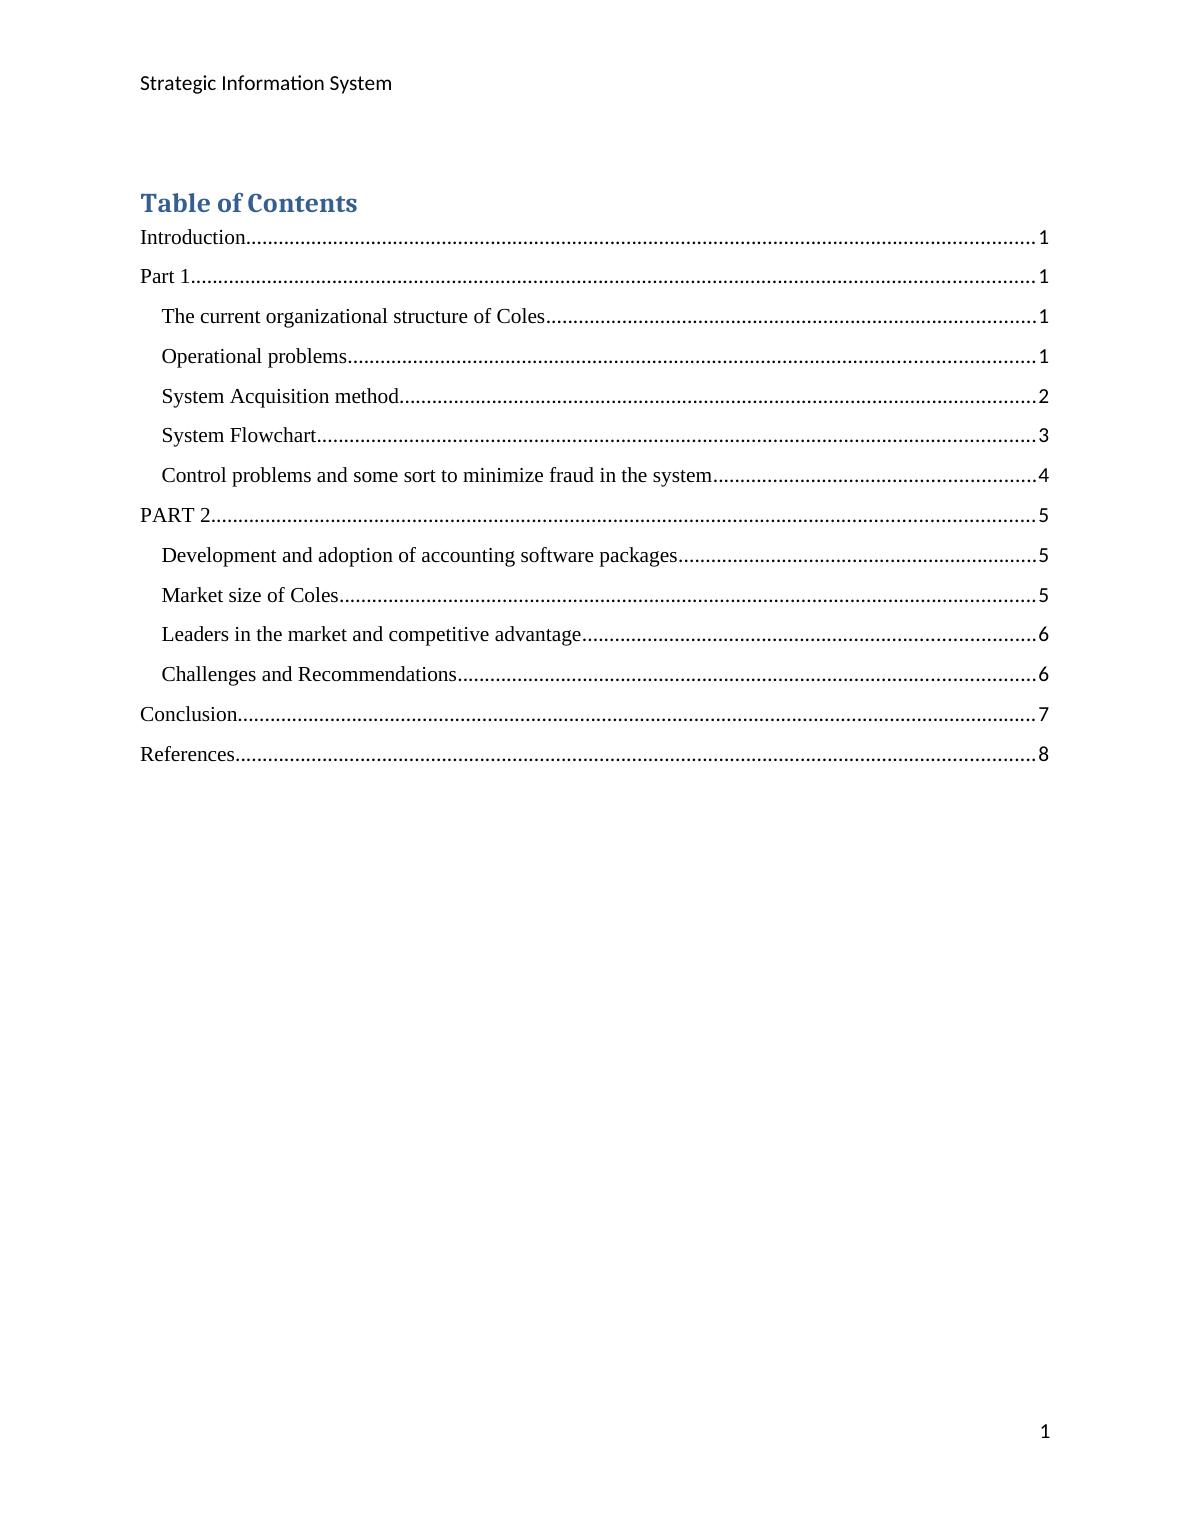 Strategic Information System Assignment (pdf)_2